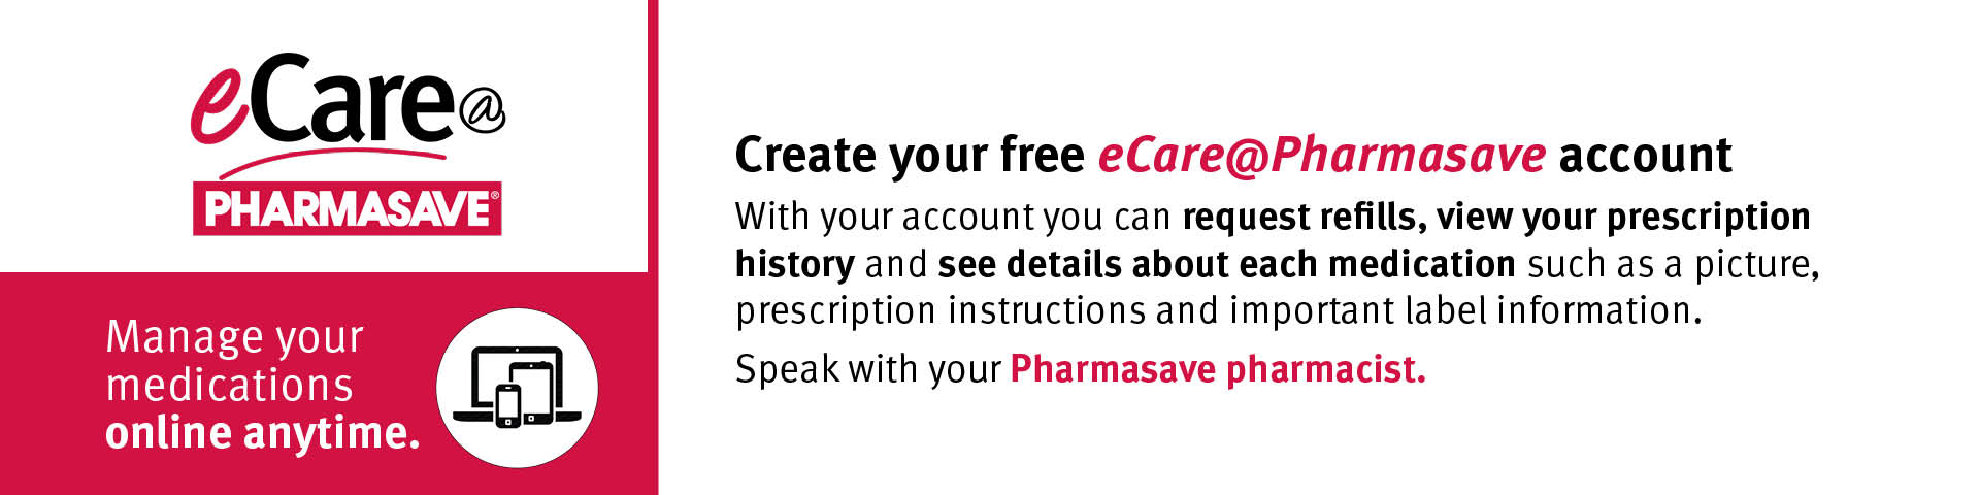 pharmasave eCare prescriptions